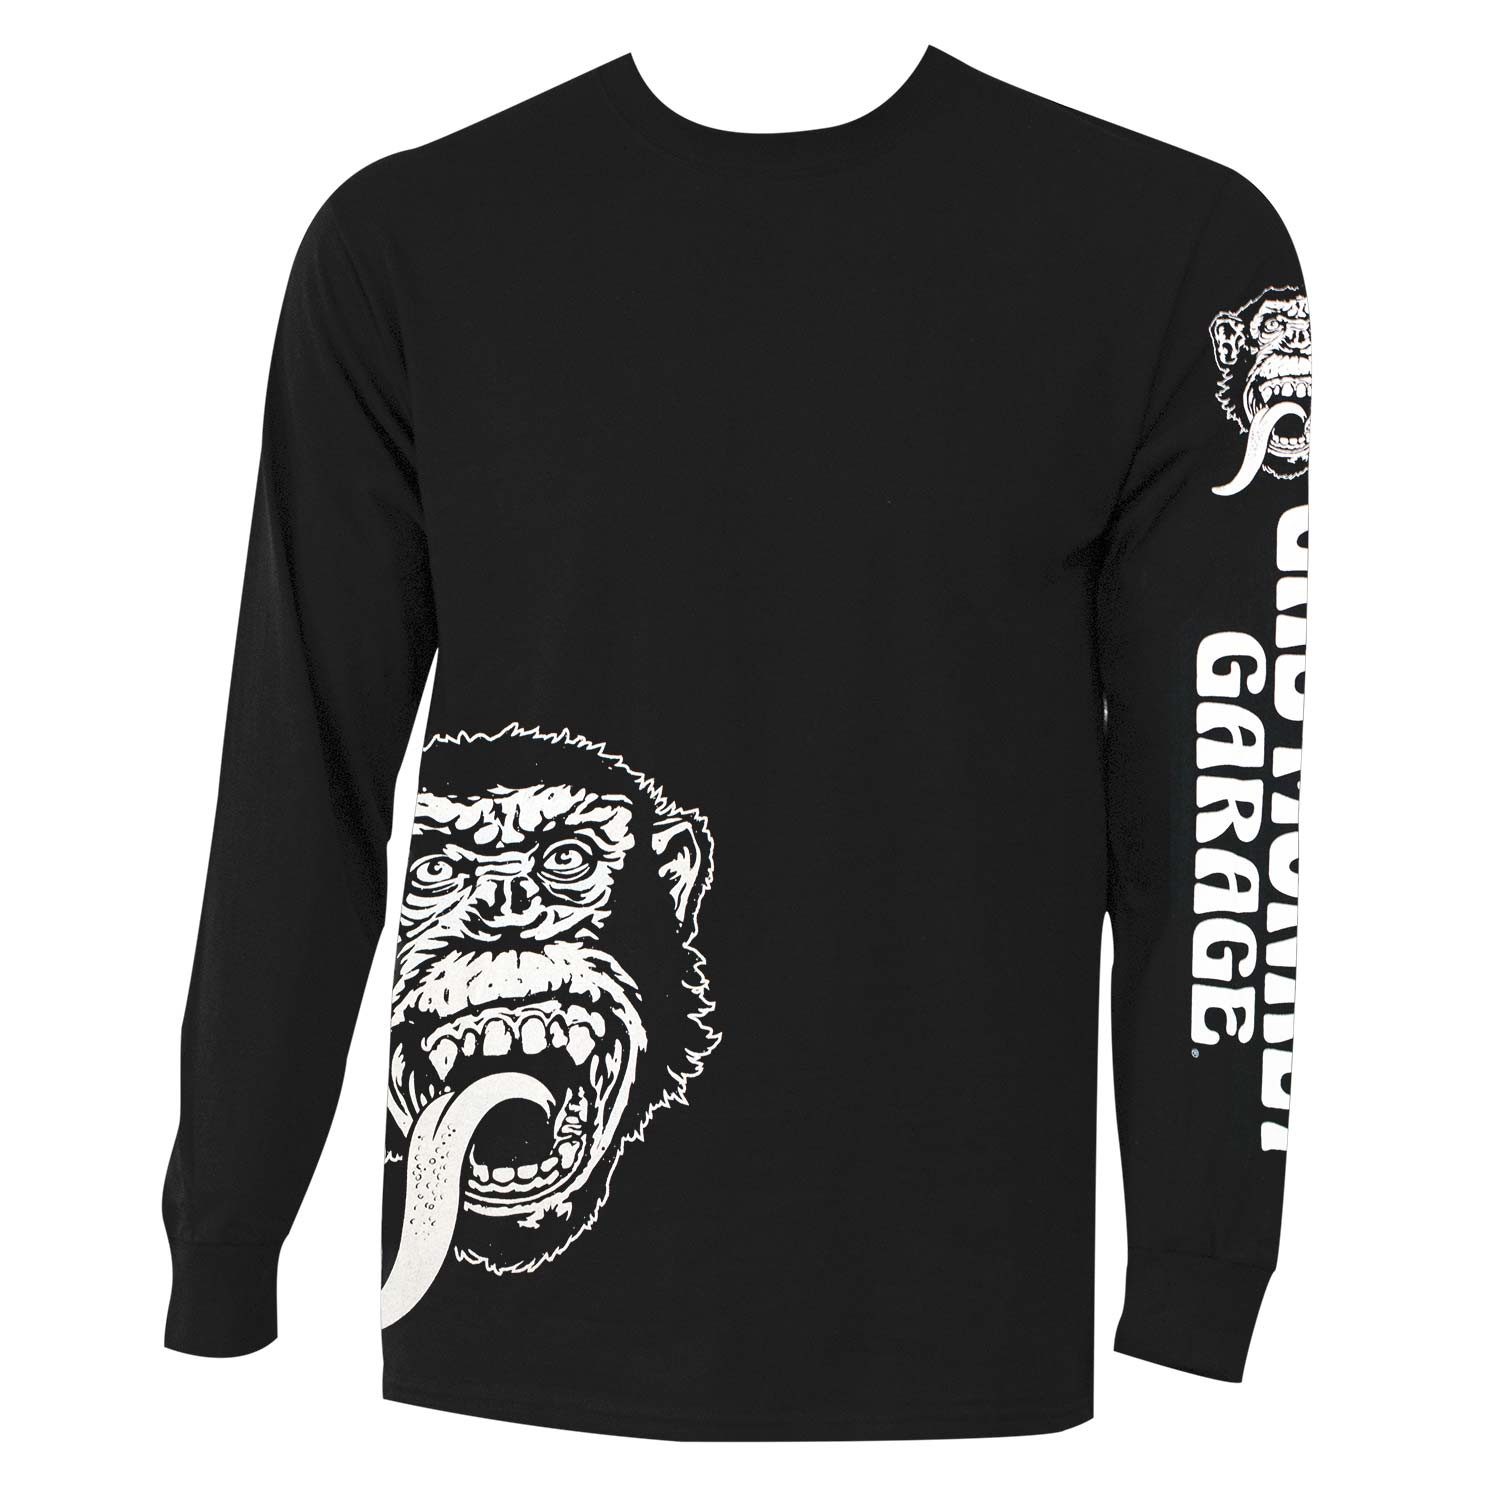 Gas Monkey Long Sleeve Logo Tee Shirt